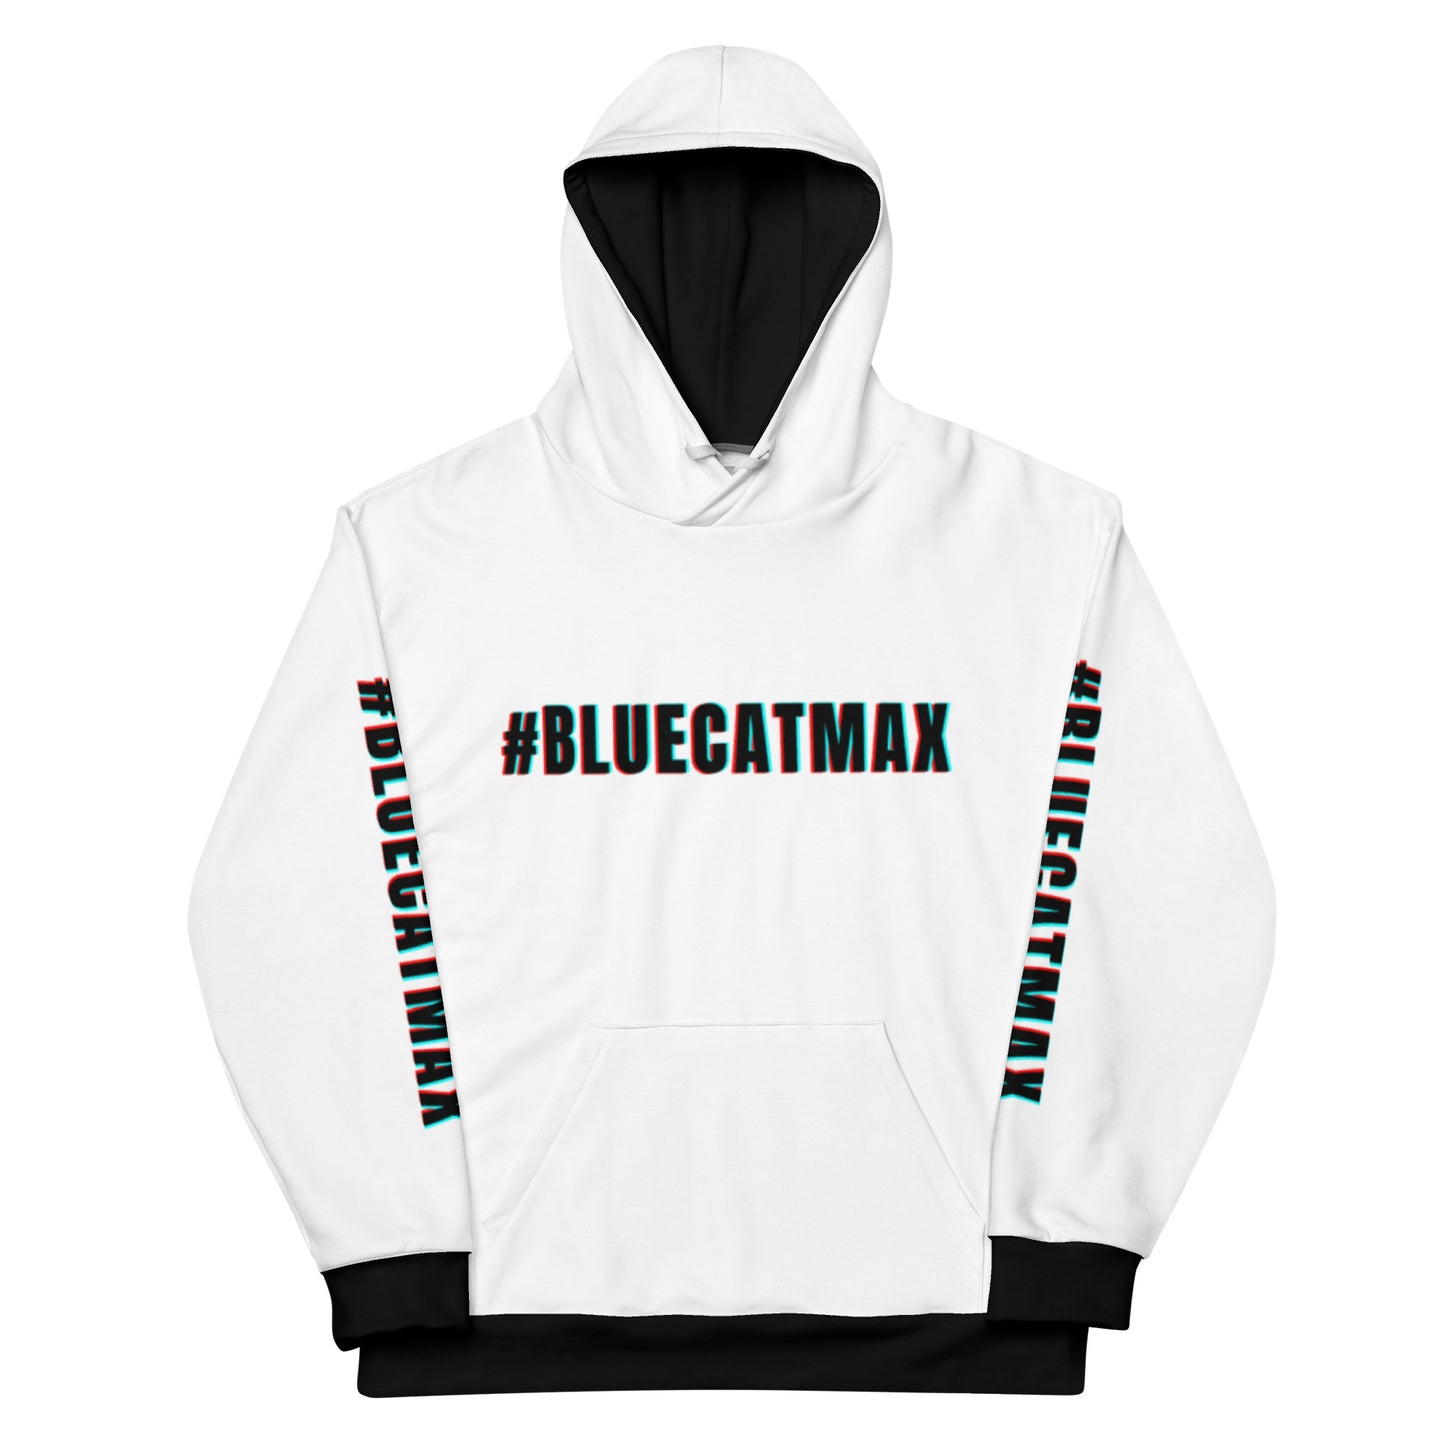 #bluecatmax Bestseller Premium Unisex Hoodie XS-3XL